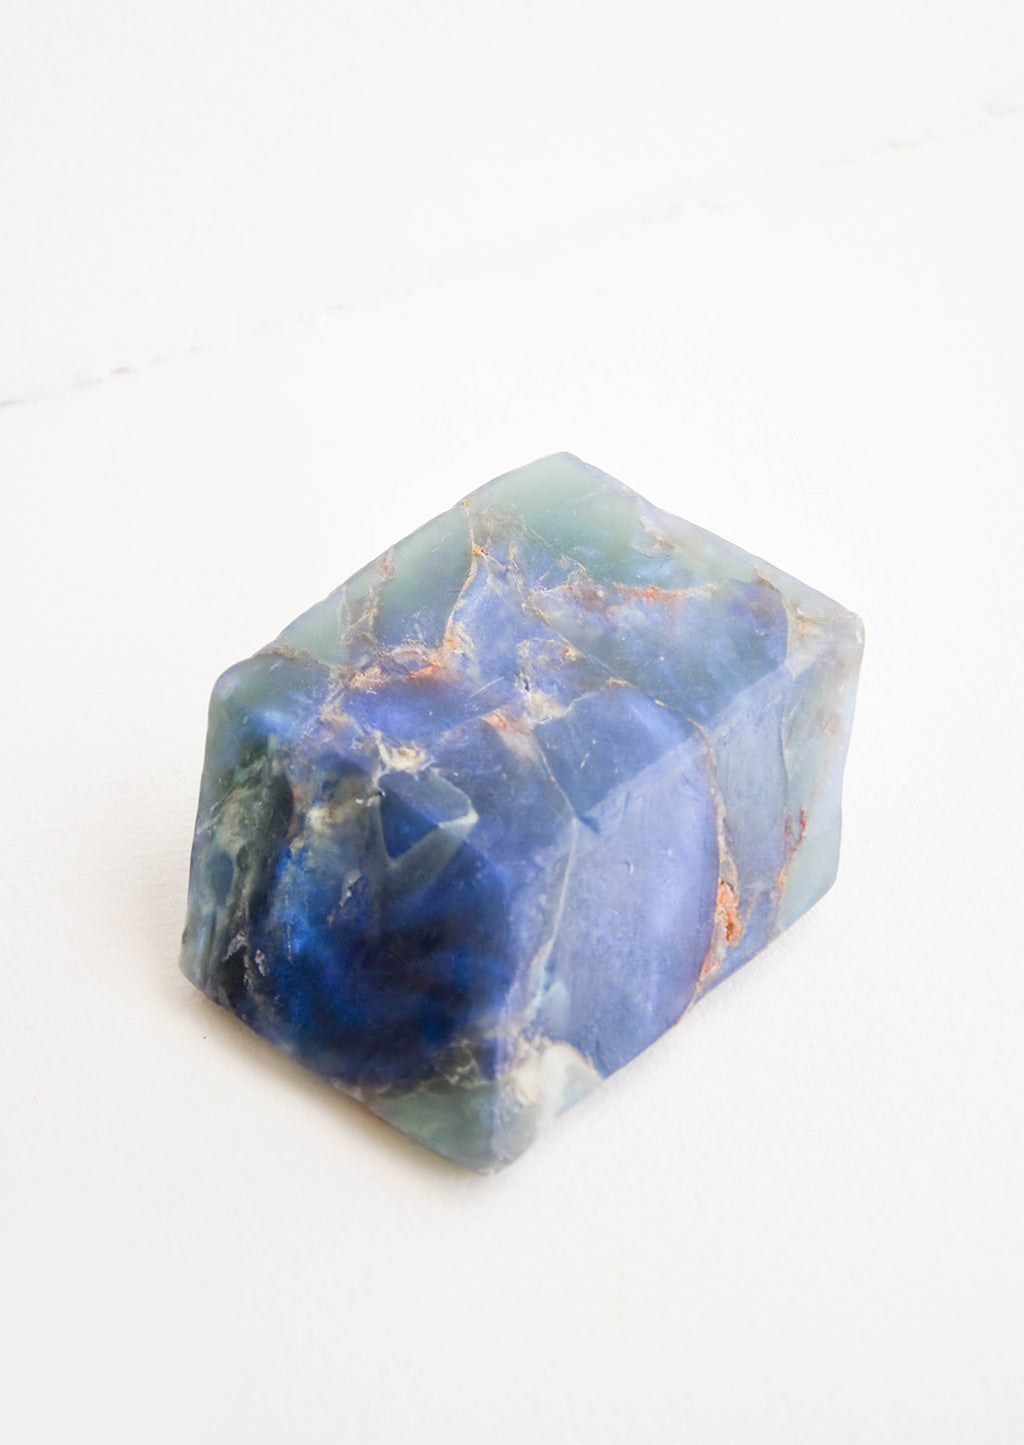 Labradorite: Bar soap in the form of a realistic looking labradorite gemstone